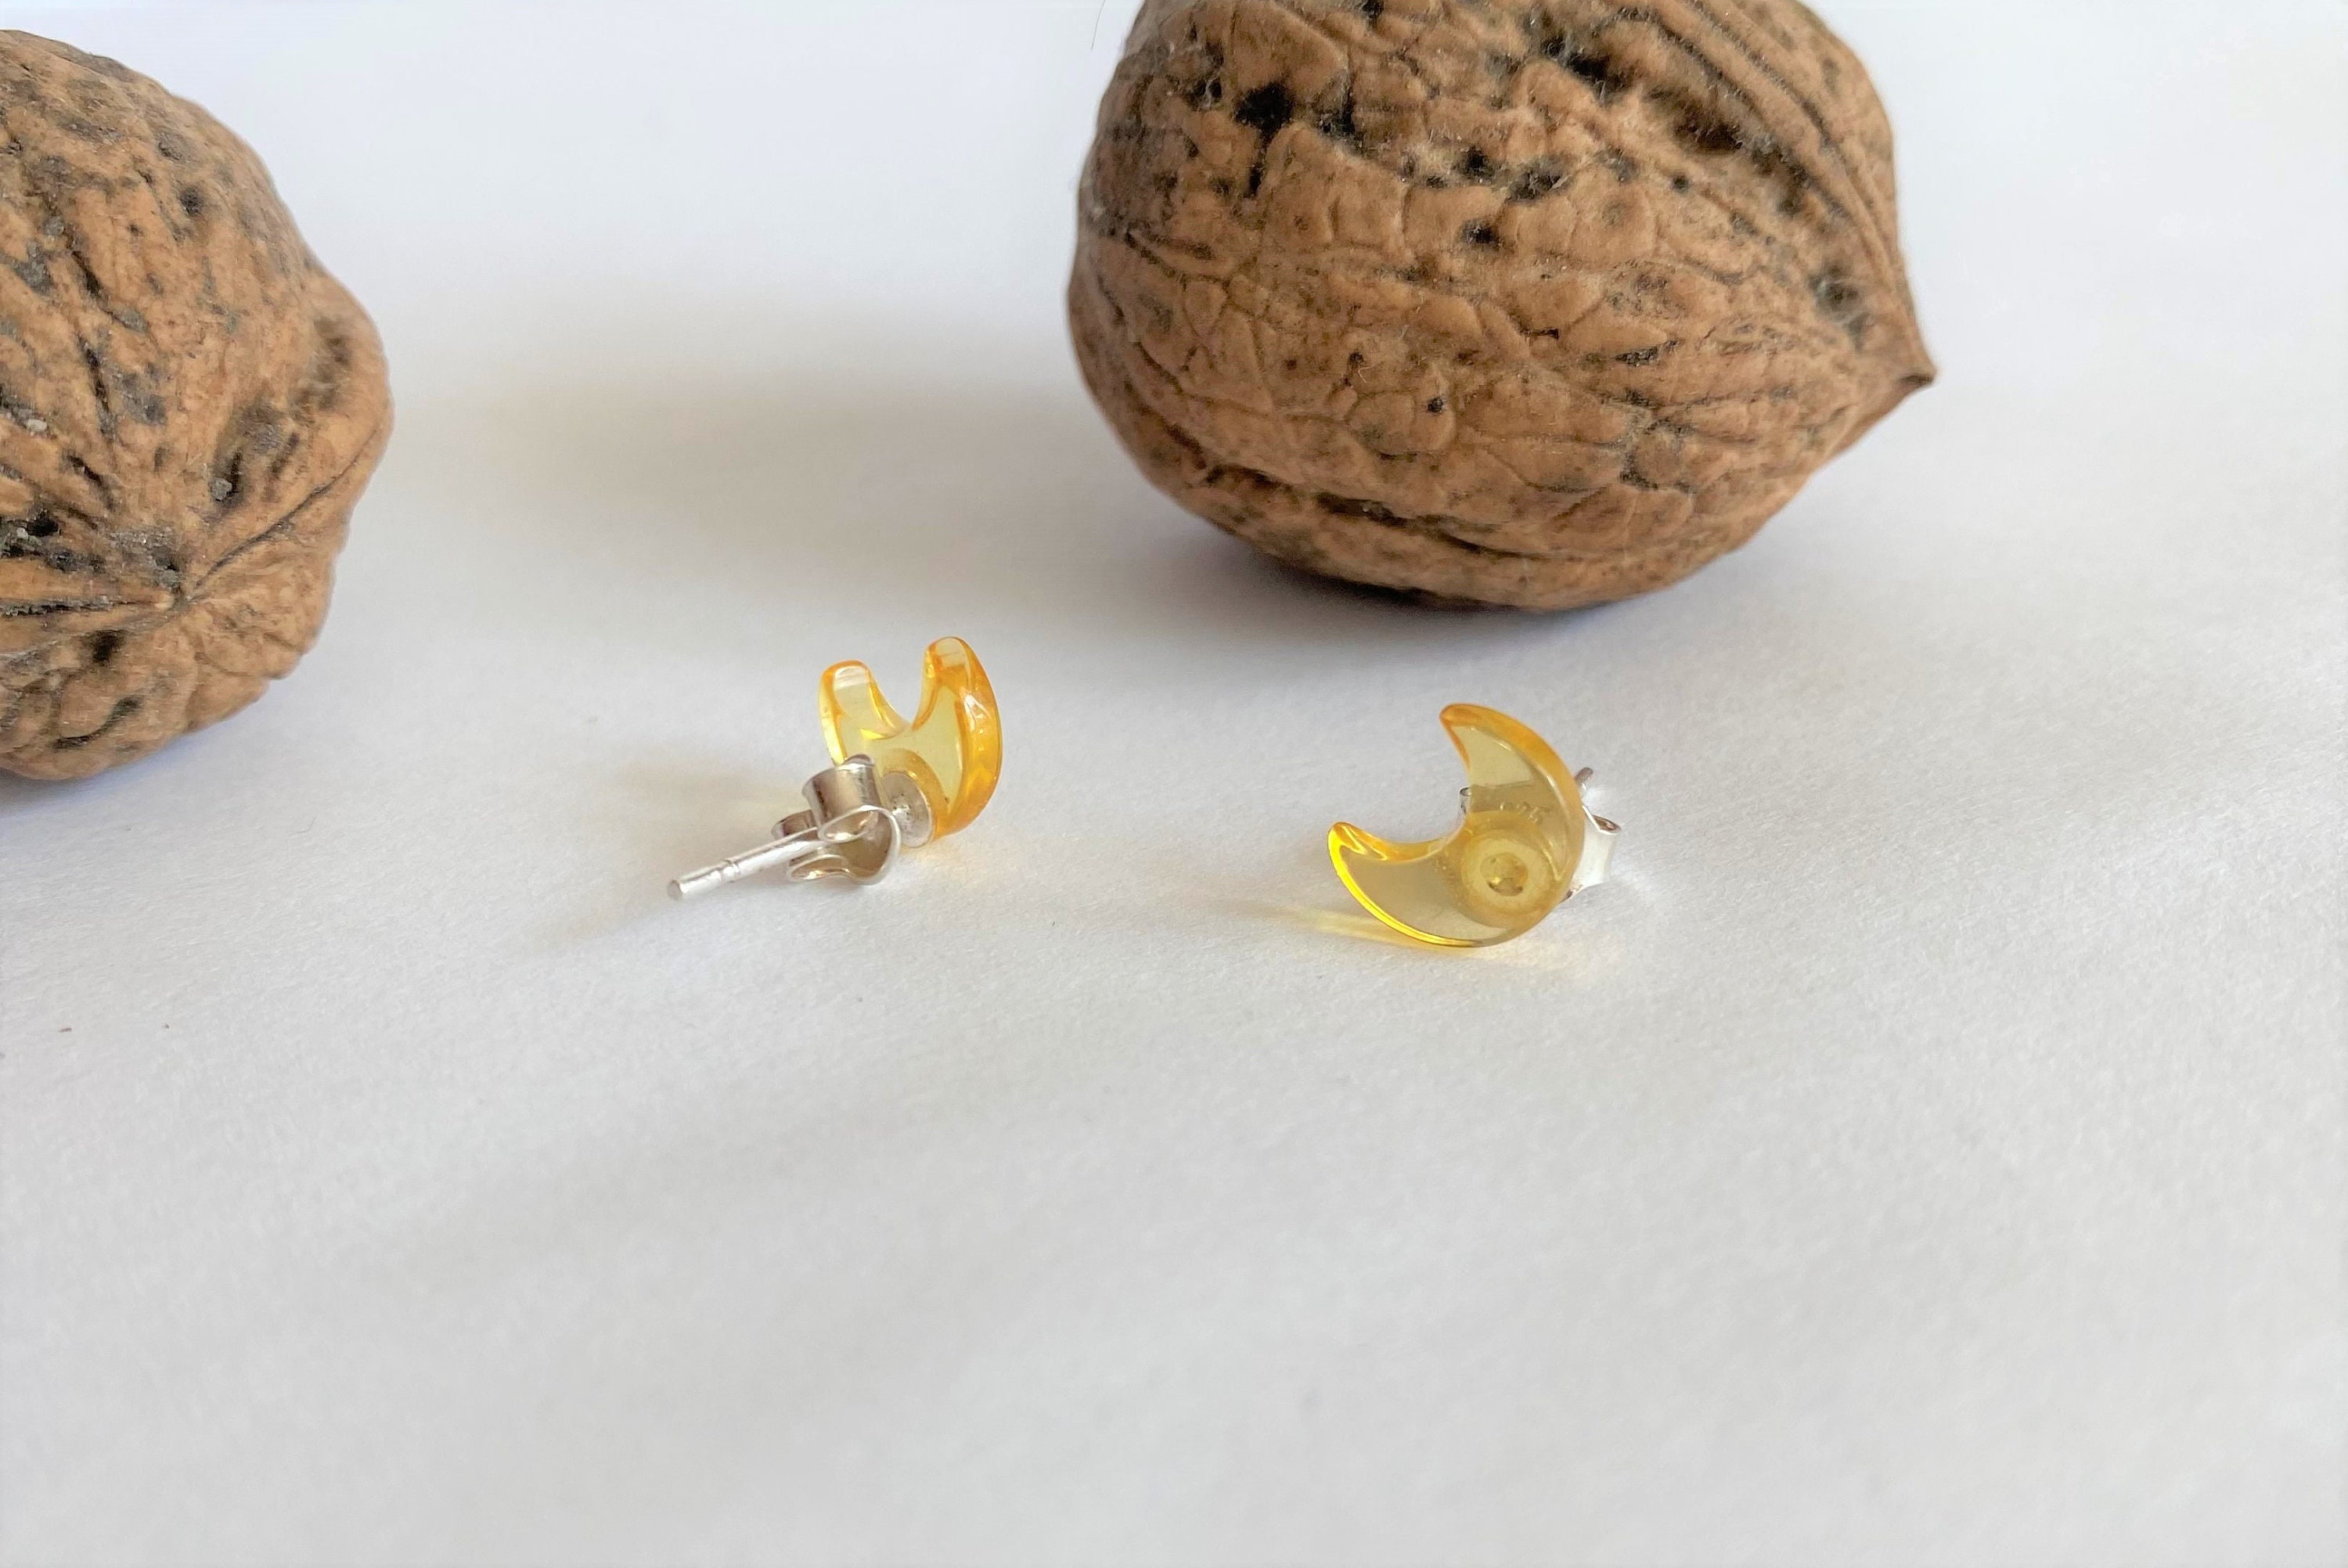 amber jewelry yellow amber earrings sterling silver studs butterfly earrings Baltic amber earrings gift for her summer earrings